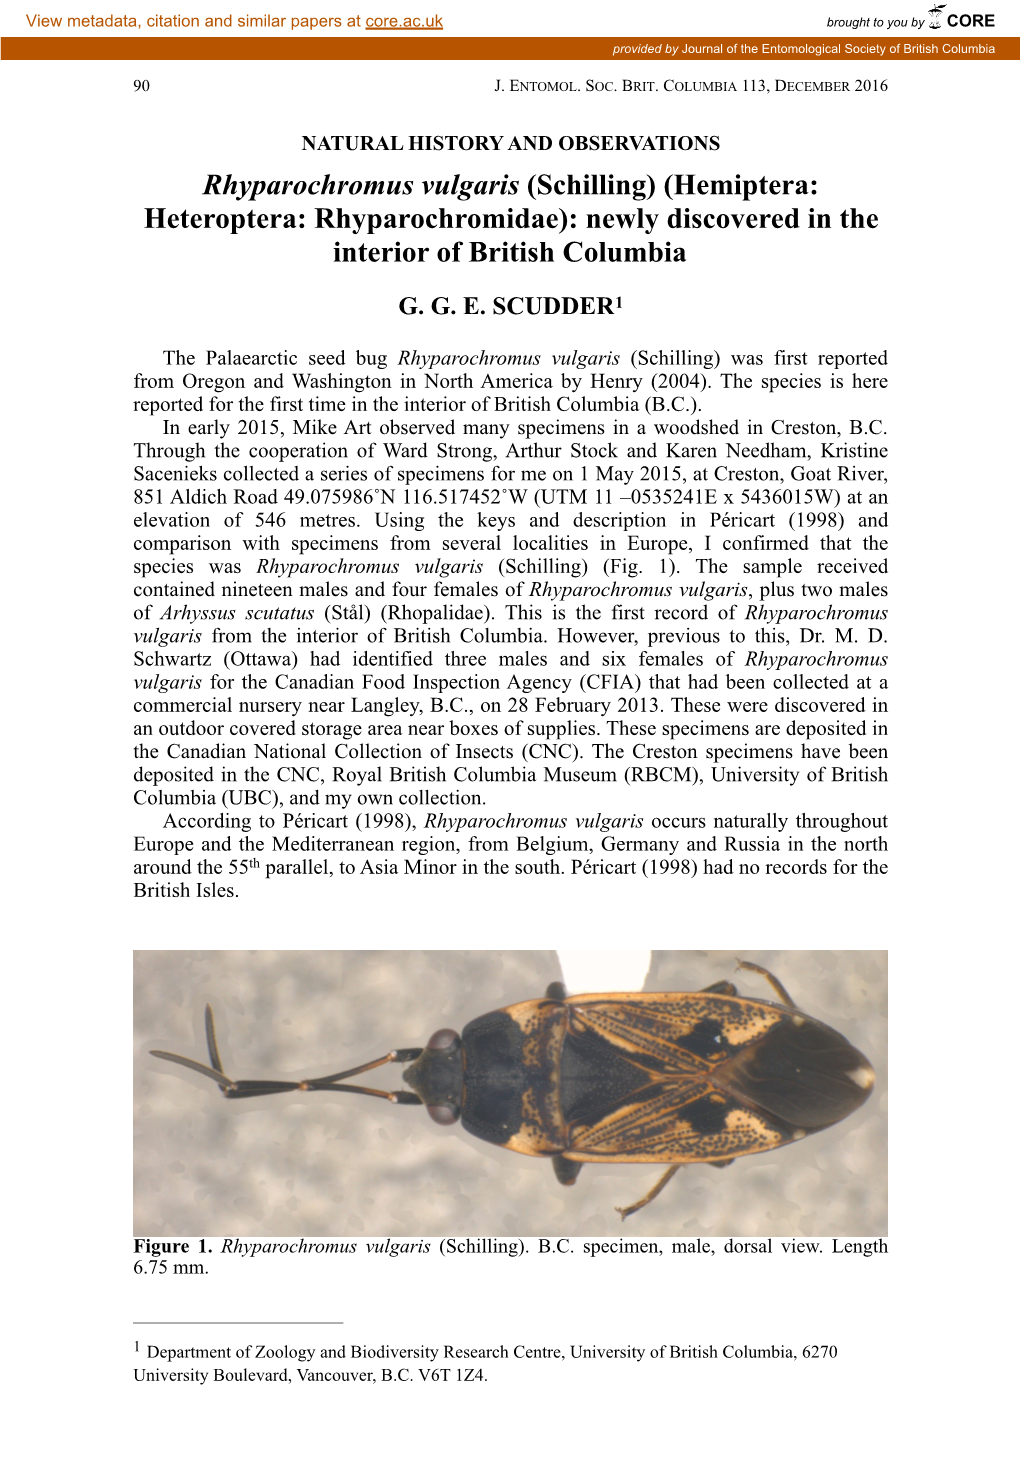 Rhyparochromus Vulgaris (Schilling) (Hemiptera: Heteroptera: Rhyparochromidae): Newly Discovered in the Interior of British Columbia